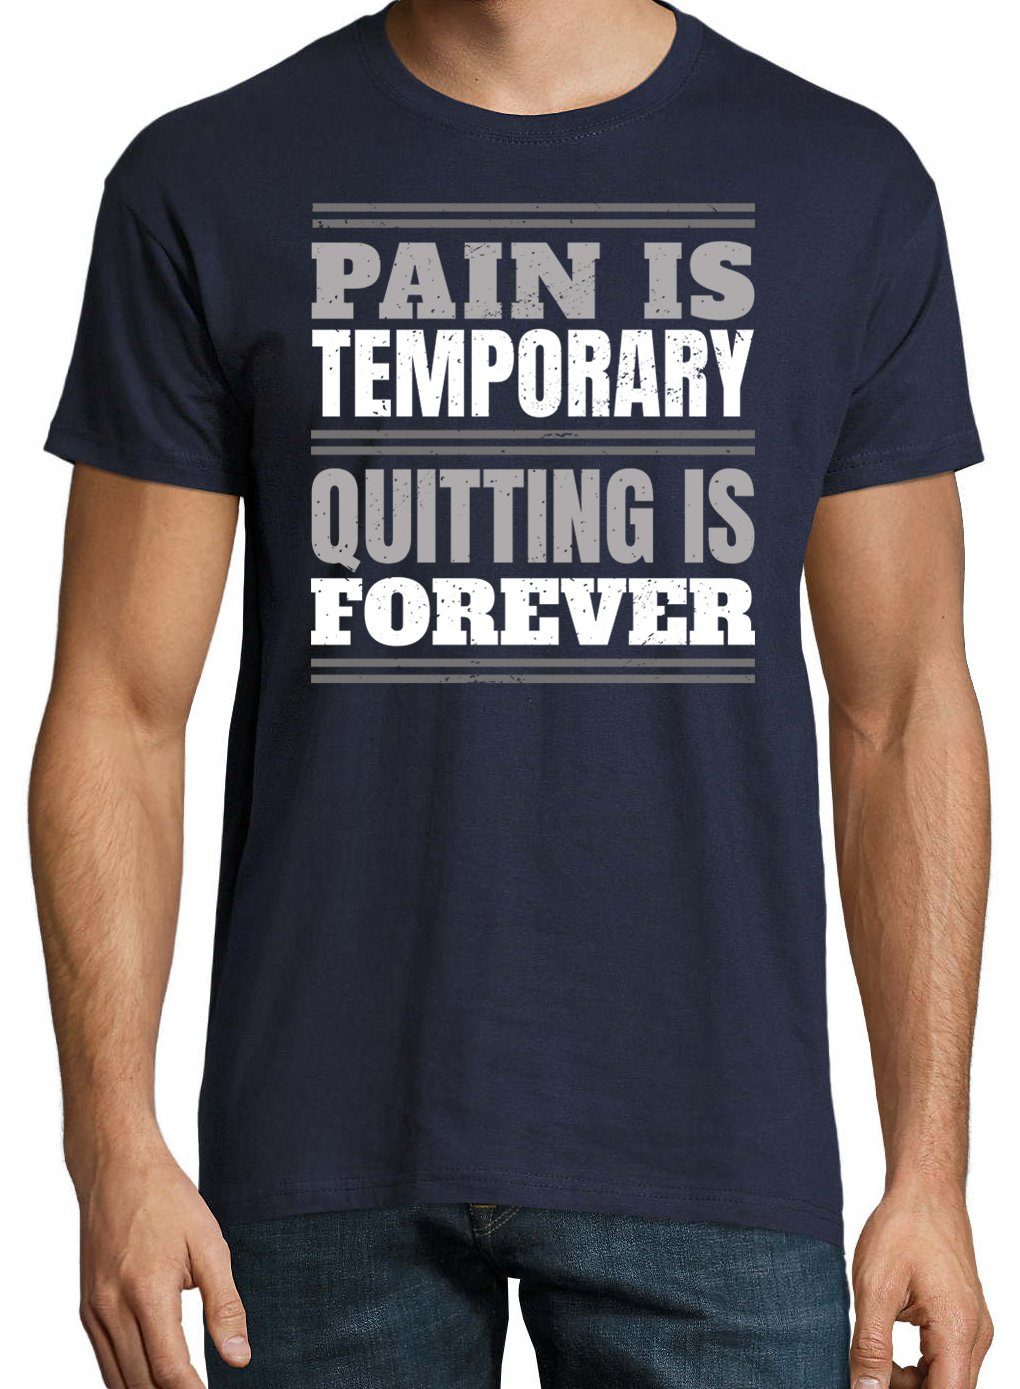 Youth Designz Frontdruck PAIN IS IS Navy FOREVER! TEMPORARY, T-Shirt QUITTING Shirt mit Herren Trendigem